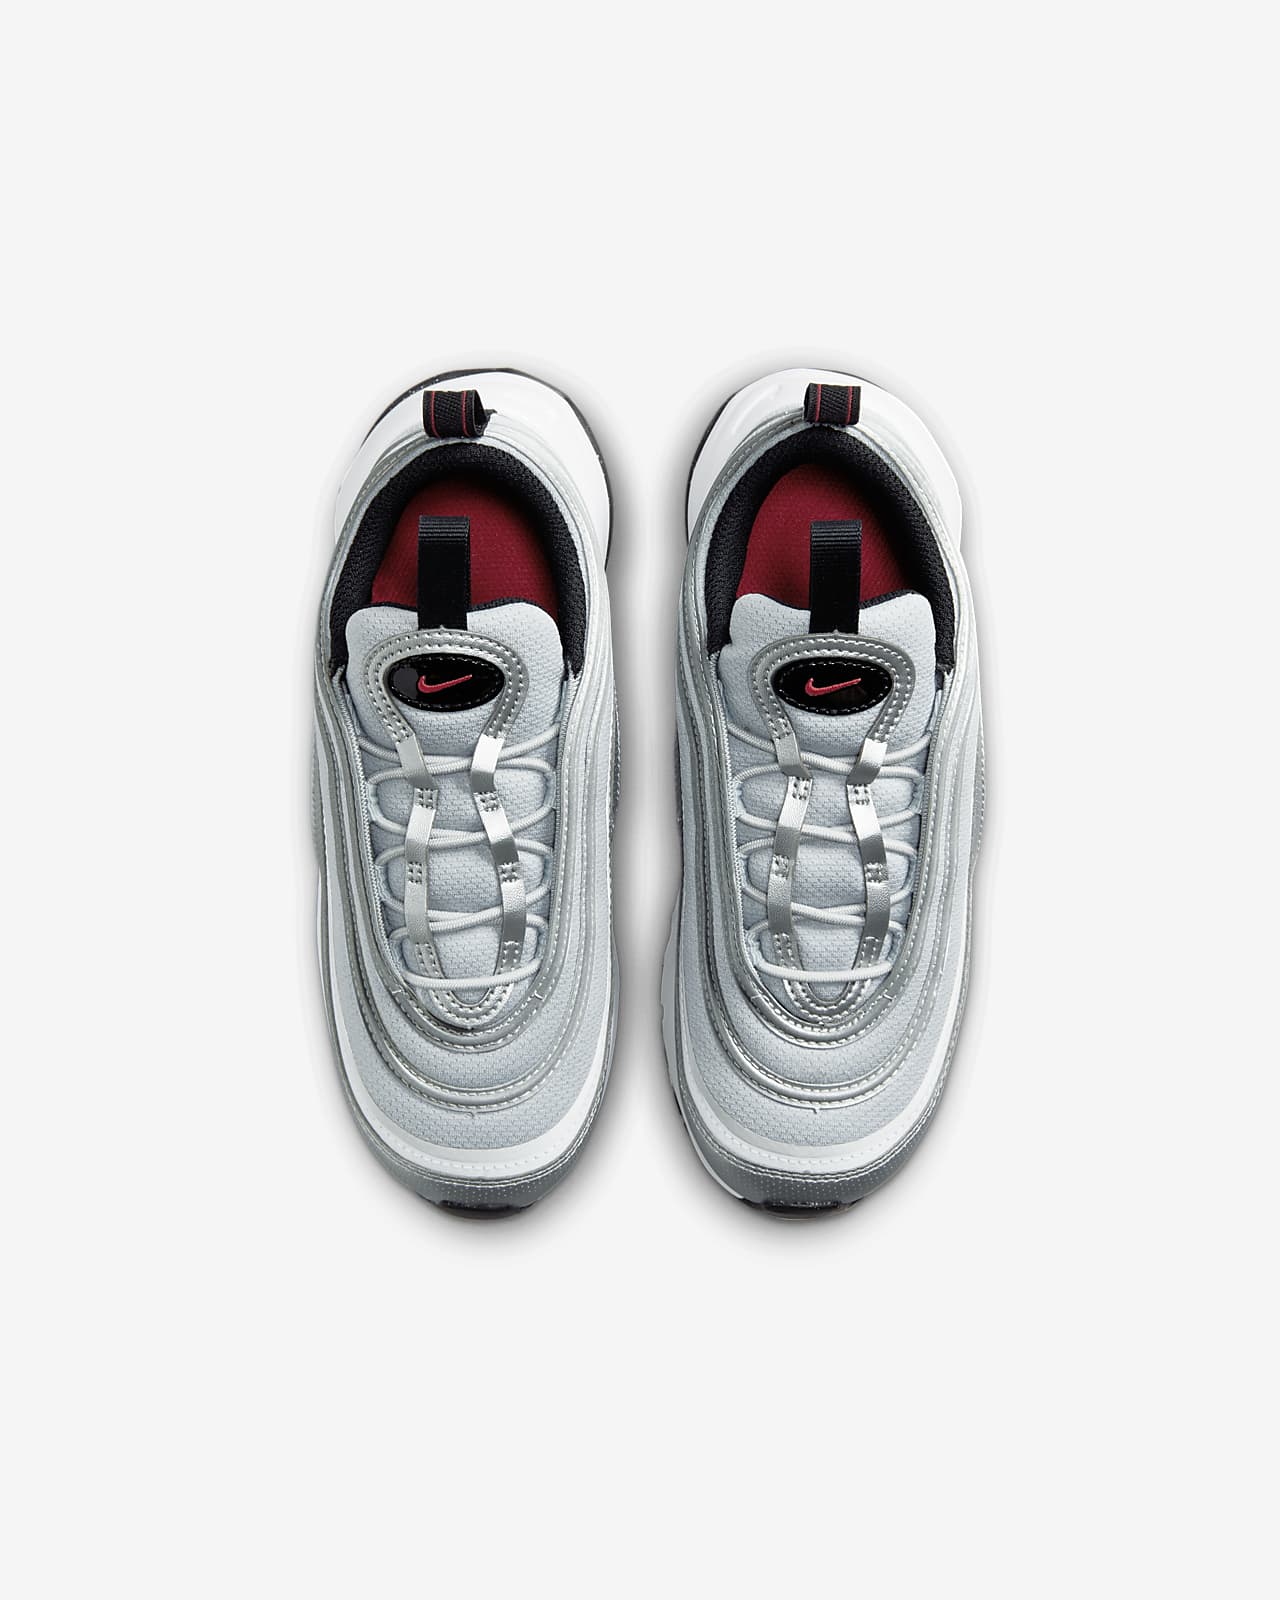 Chaussures Nike Air Max 97 pour Enfant